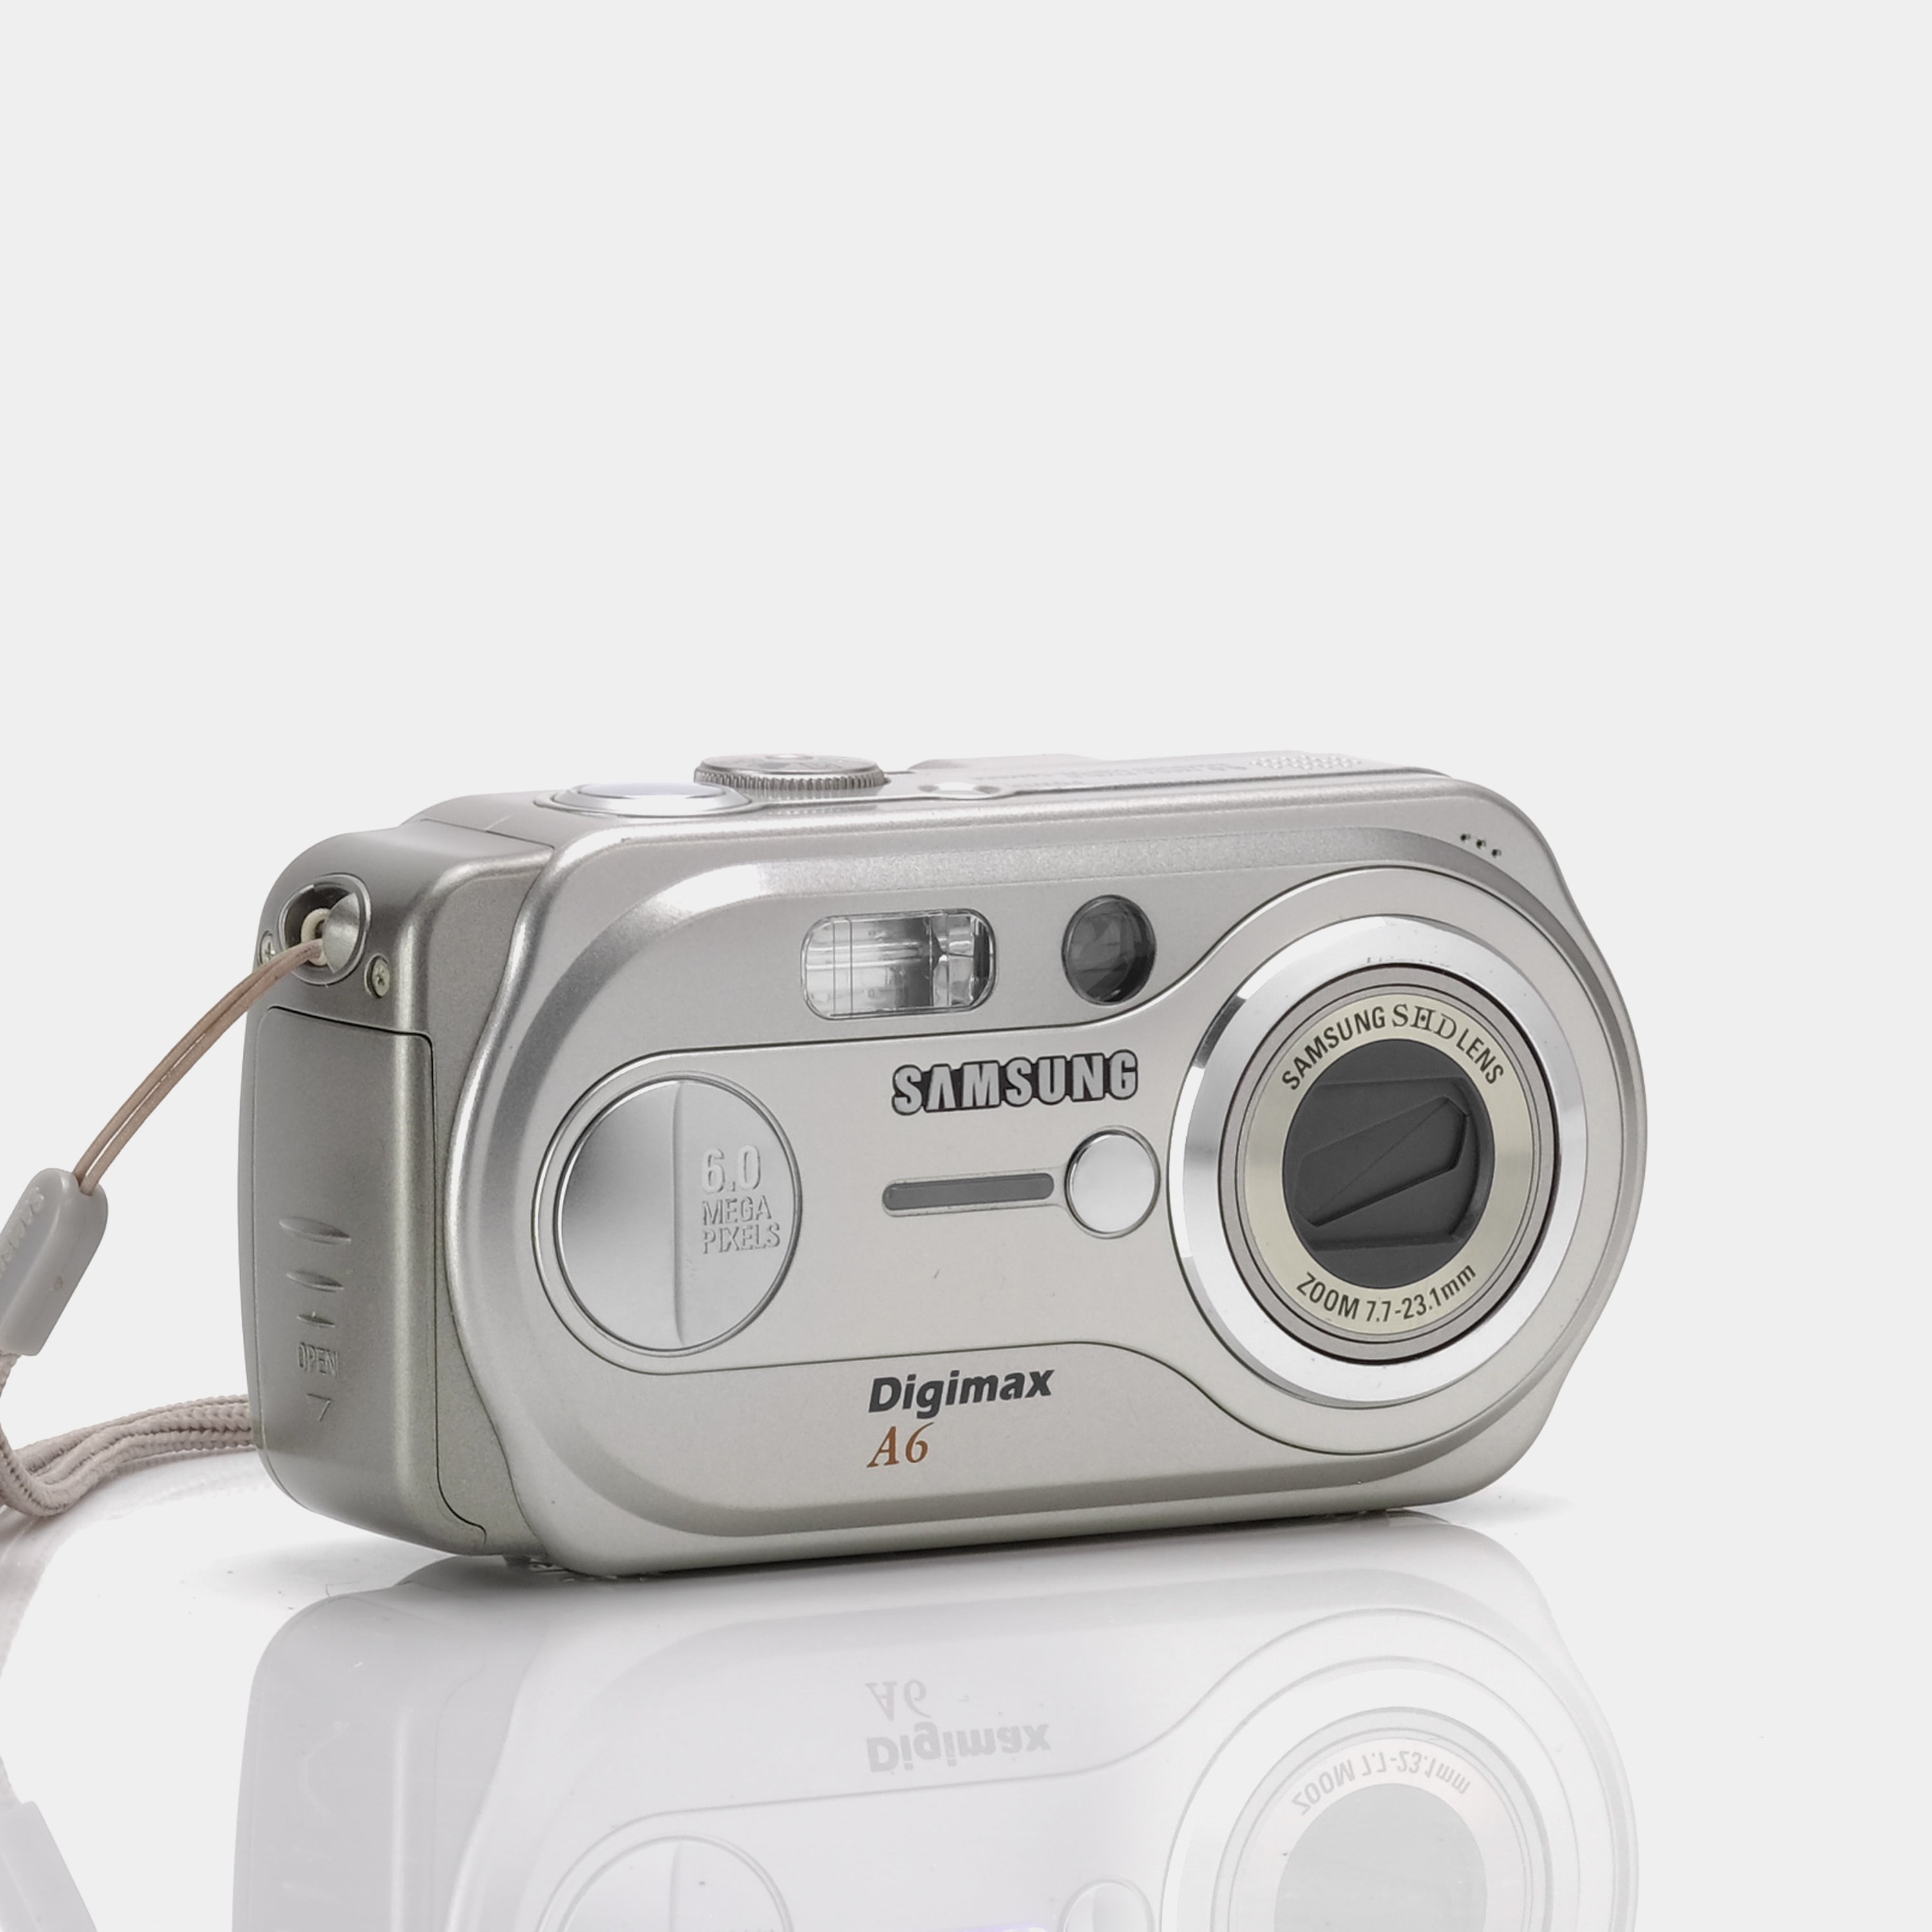 Samsung Digimax A6/A63 Point and Shoot Digital Camera